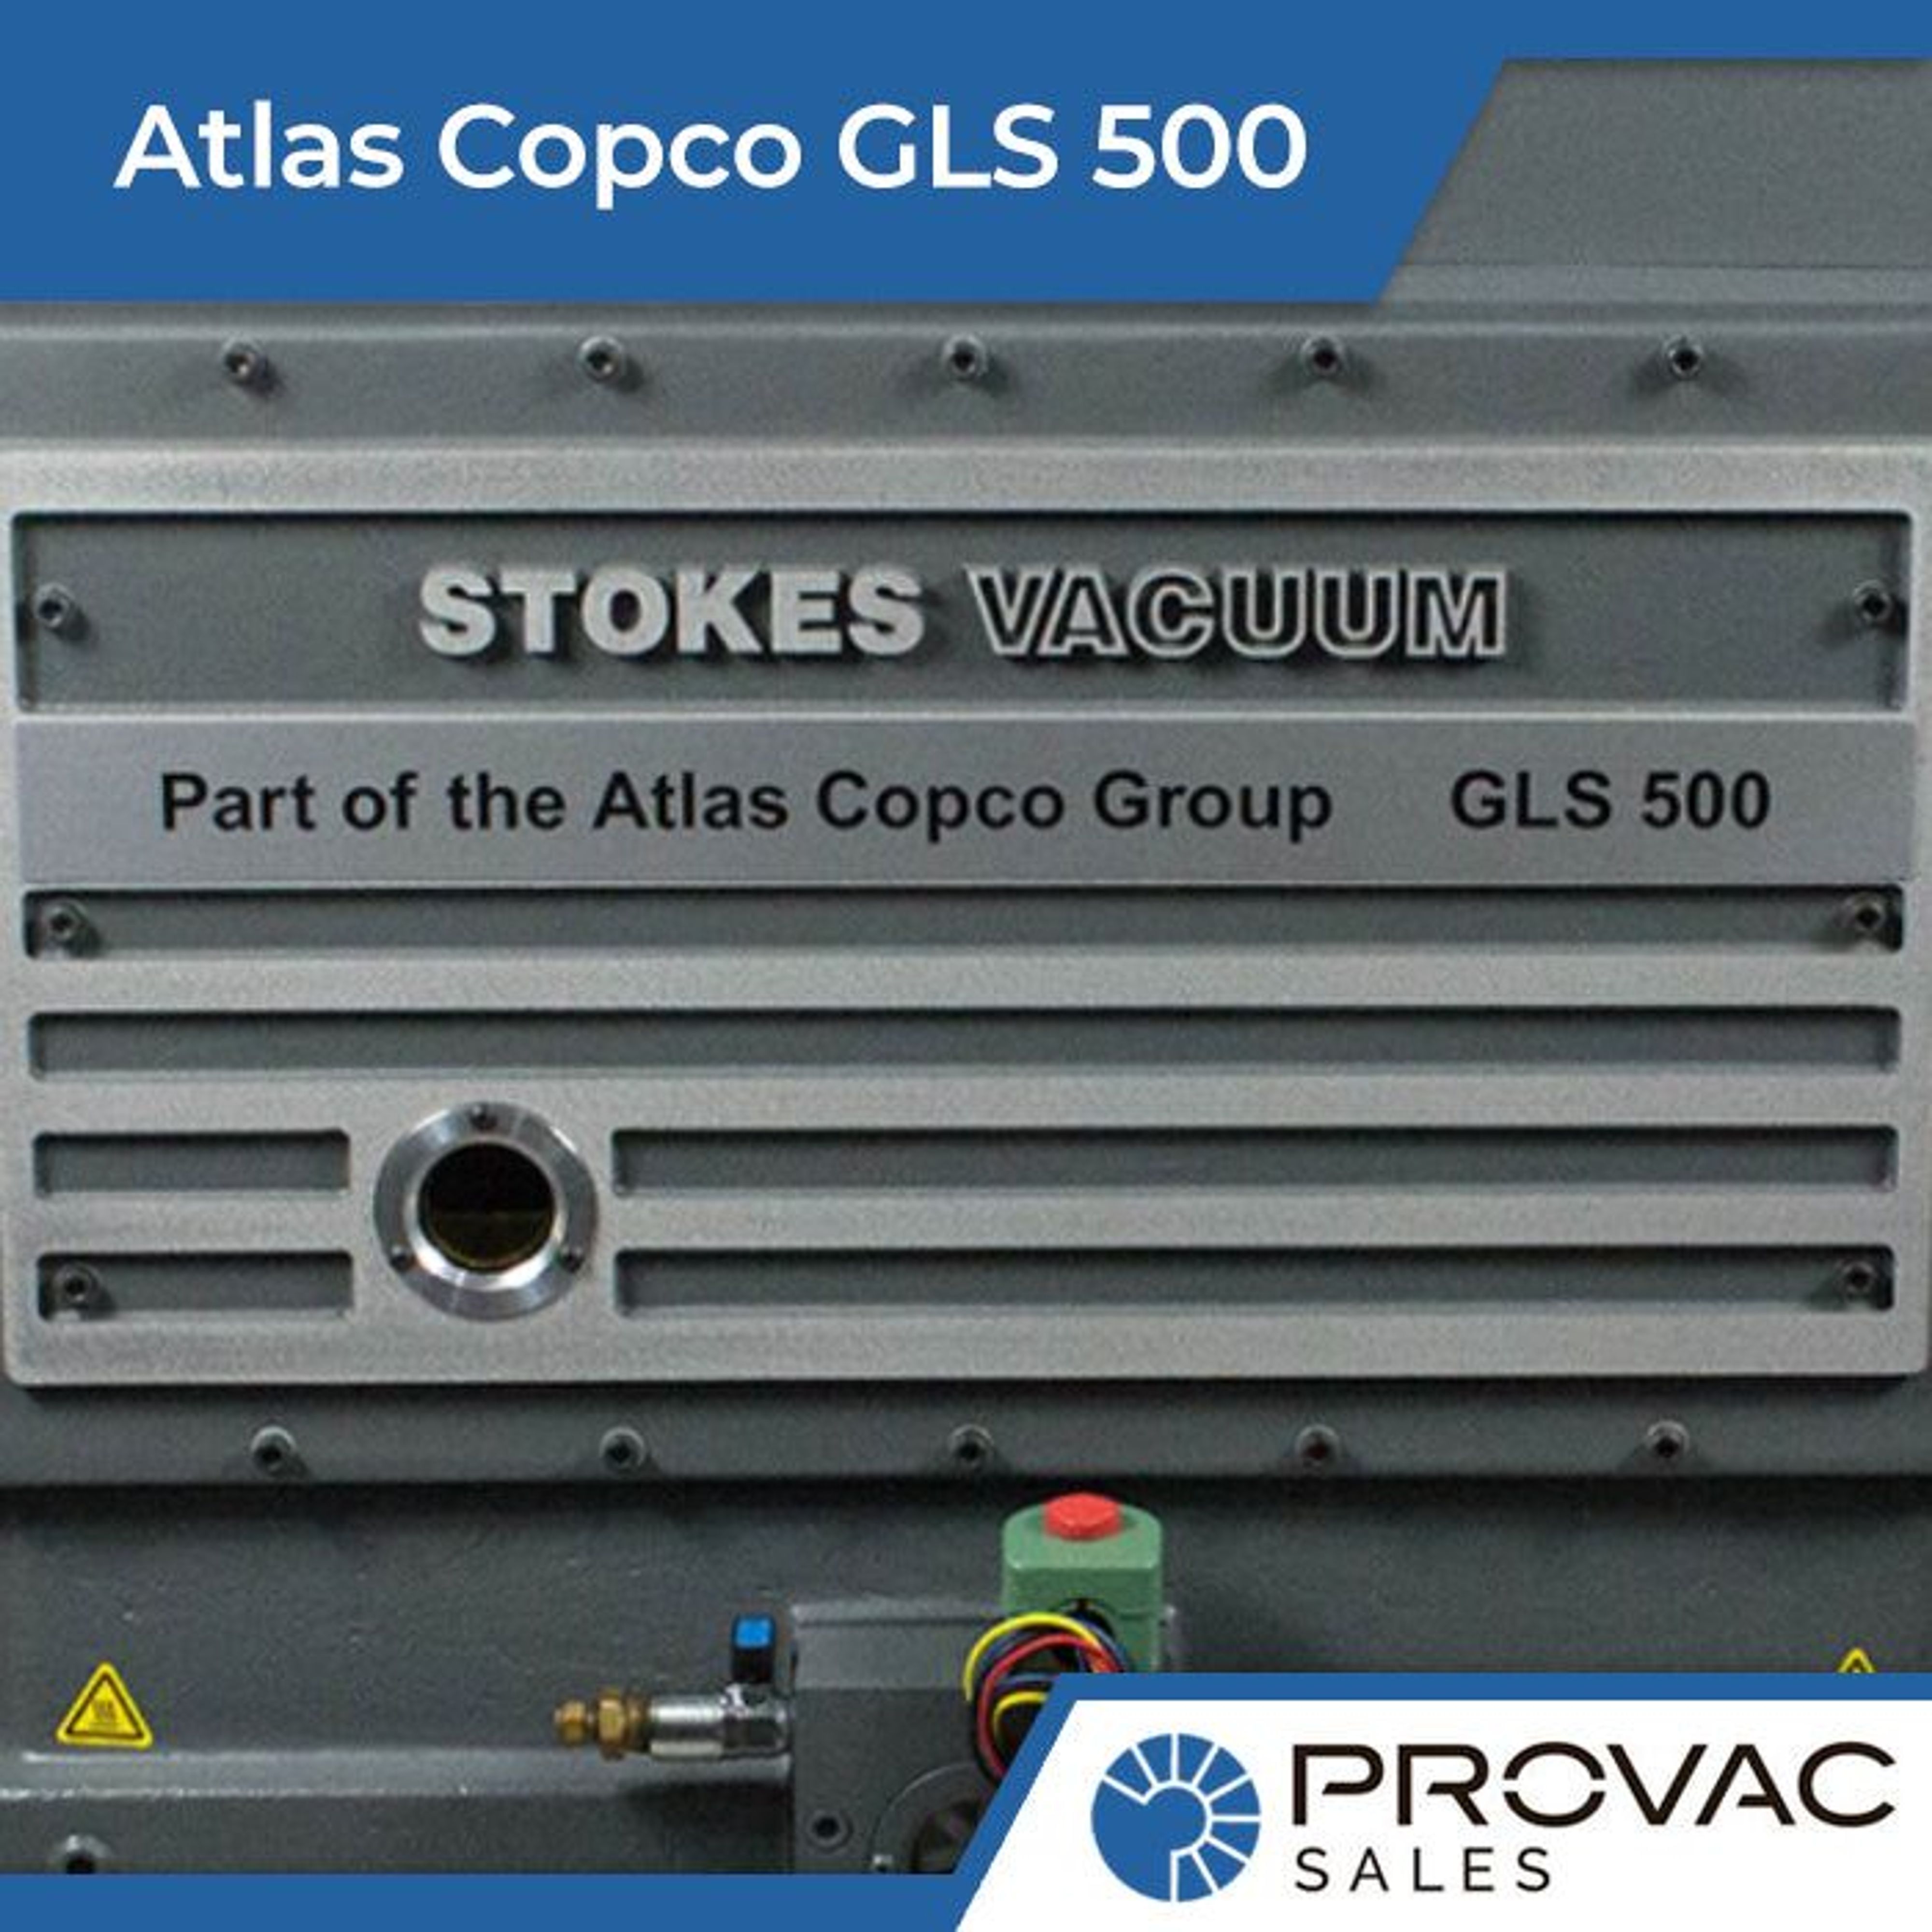 On Sale Now: New Atlas Copco GLS 500 Piston Pump Background